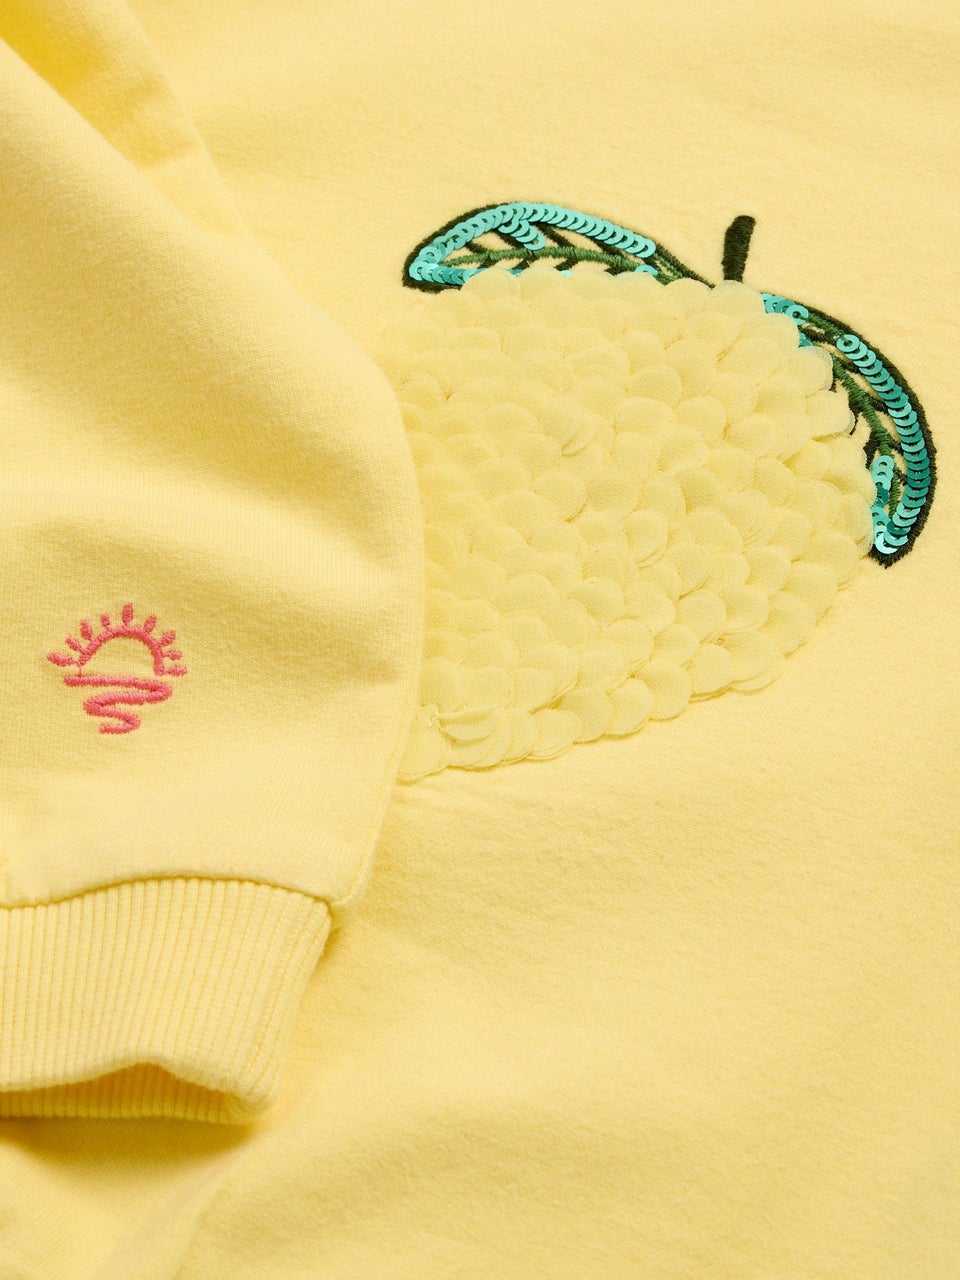 Sweatshirt mit Zitronenmotiv